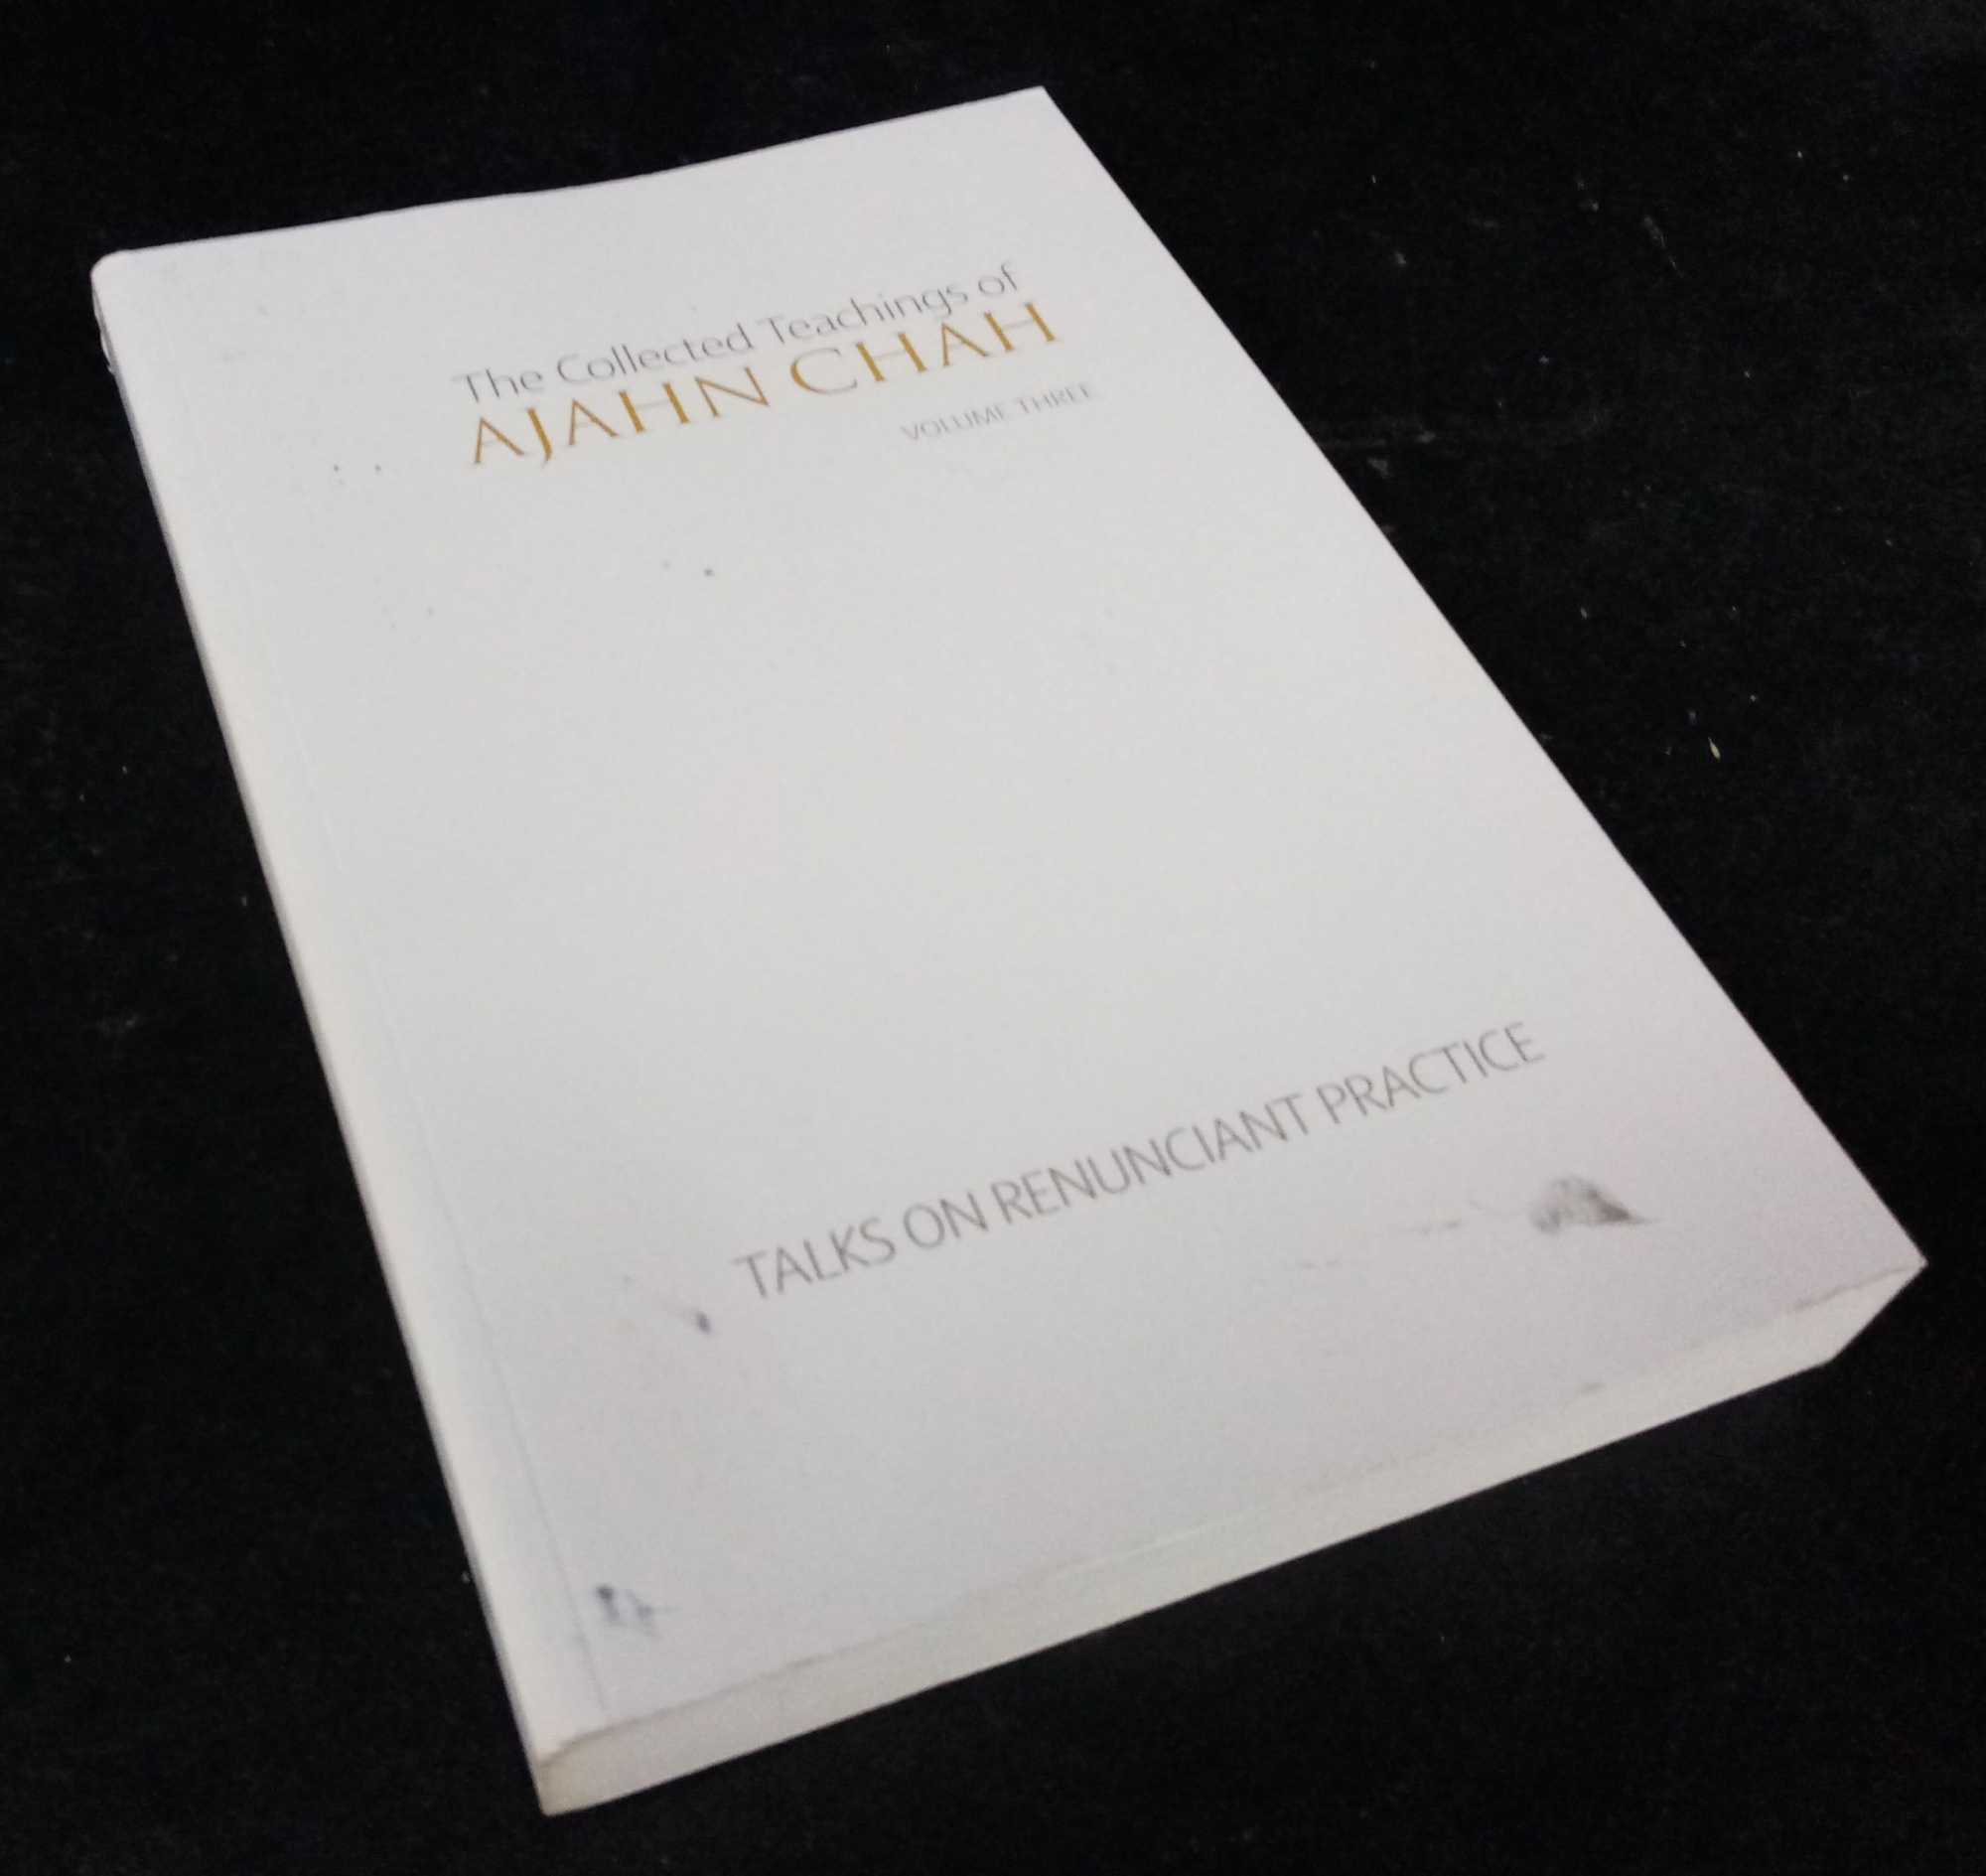 Ajahn Chah - The Collected Teachings of Ajahn Chah, Vol. 3: Talks on Renunciant Practice